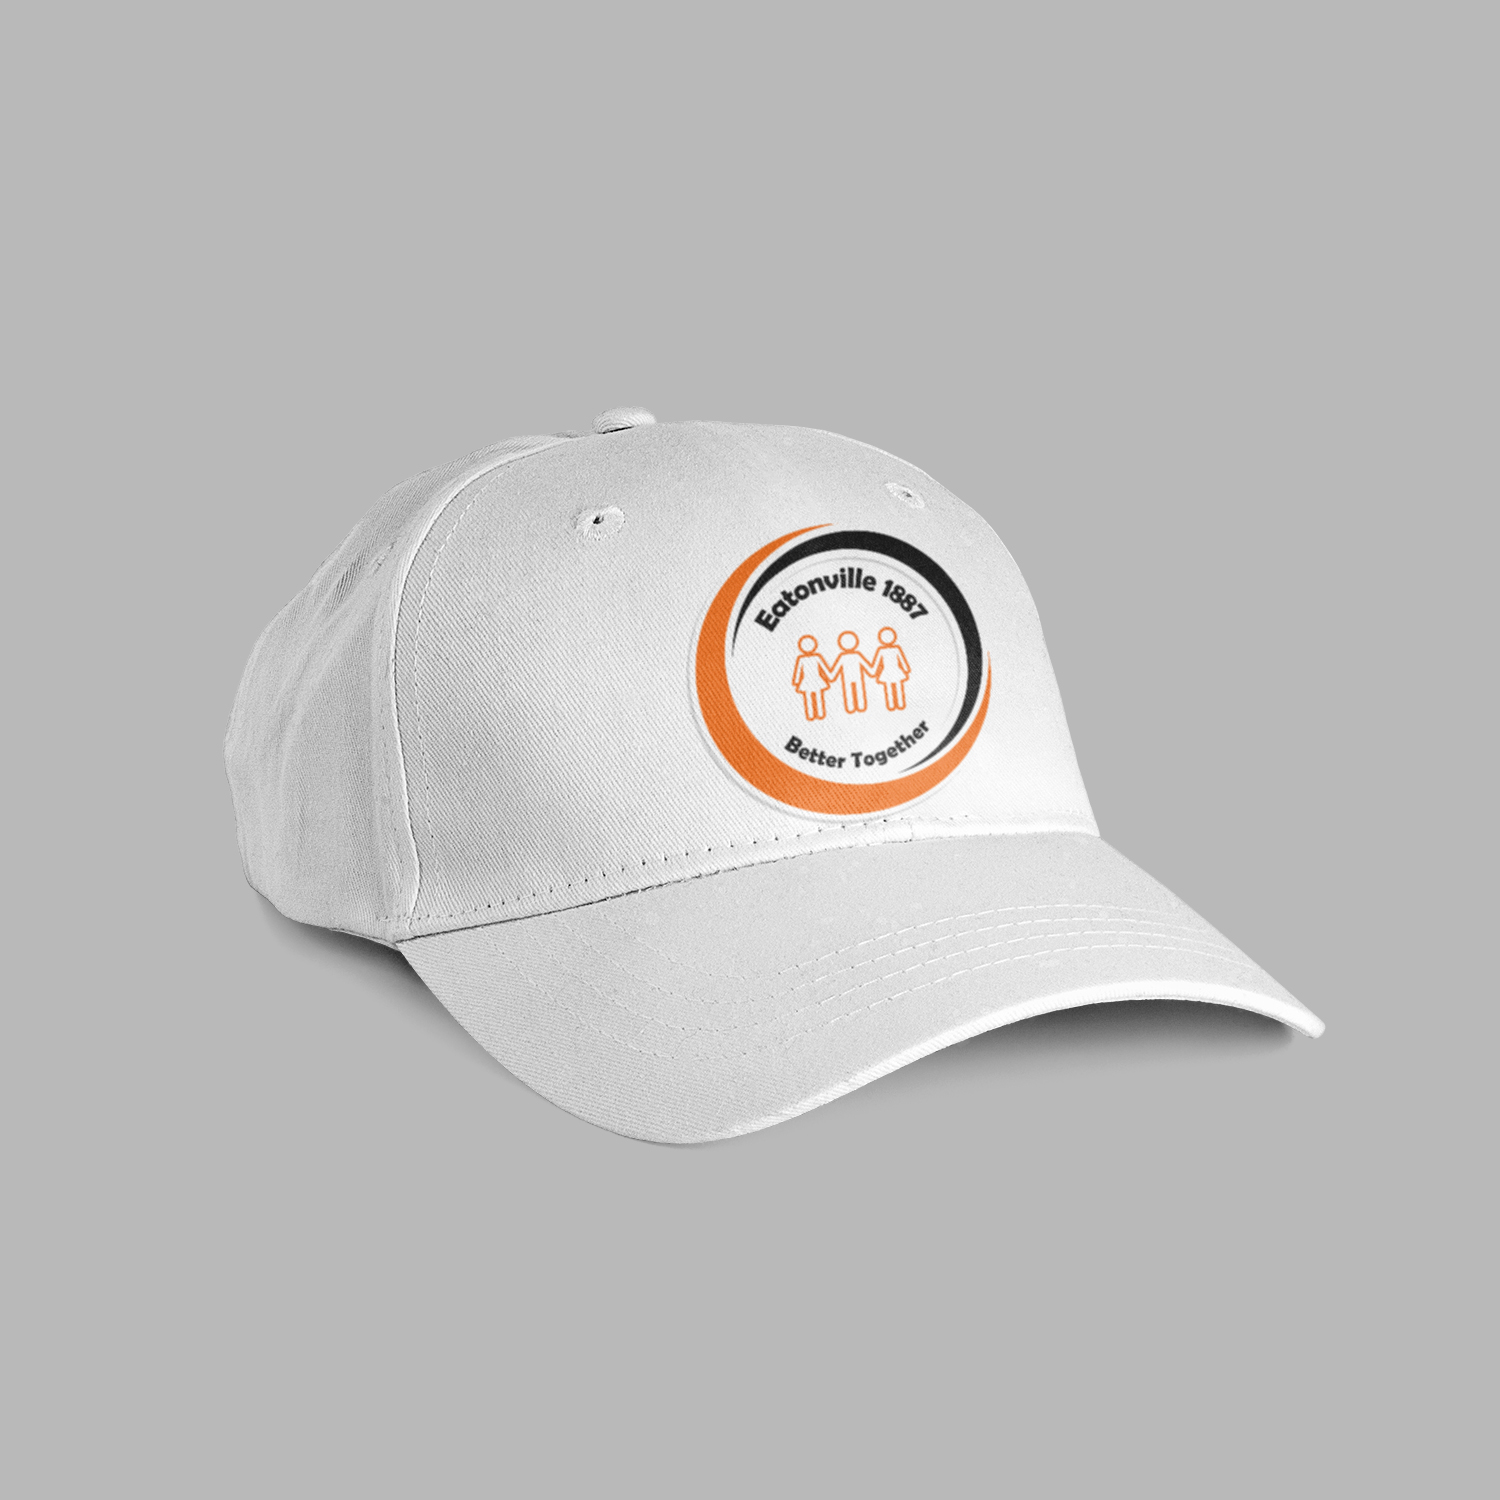 White cap